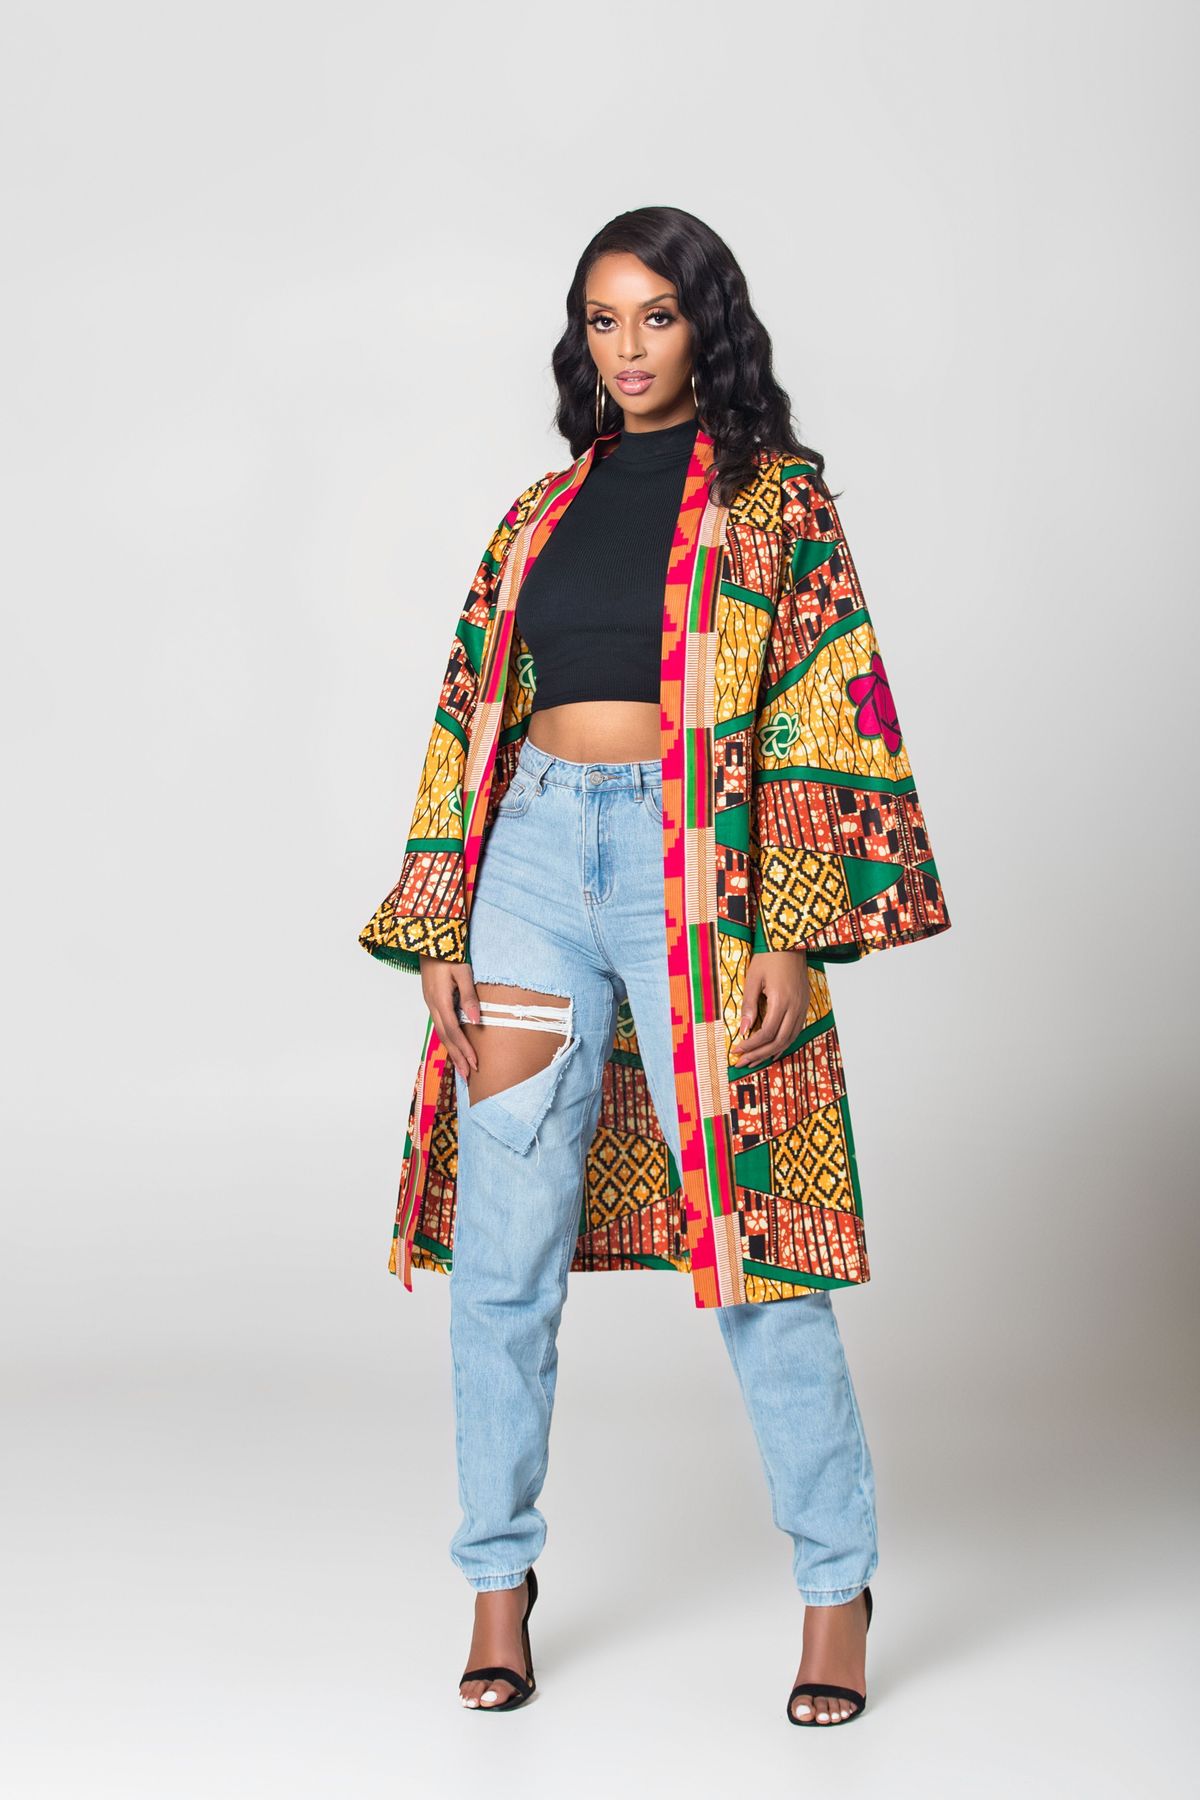 The African Print Kimono Delivers Style and Zen - Jamila Kyari Co.